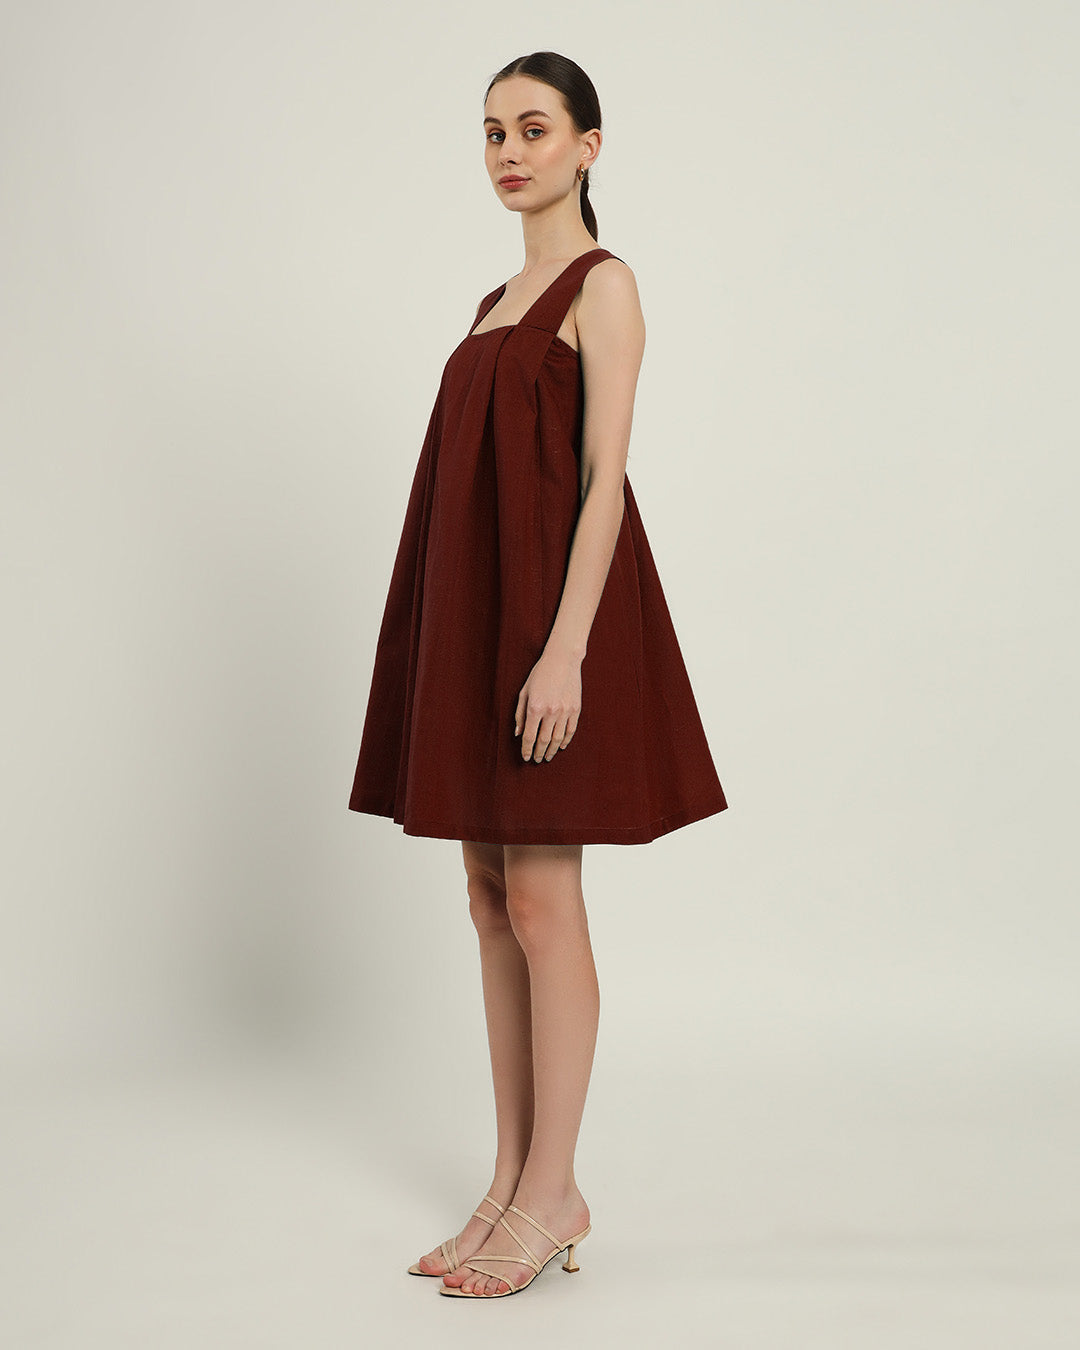 The Larissa Rouge Dress